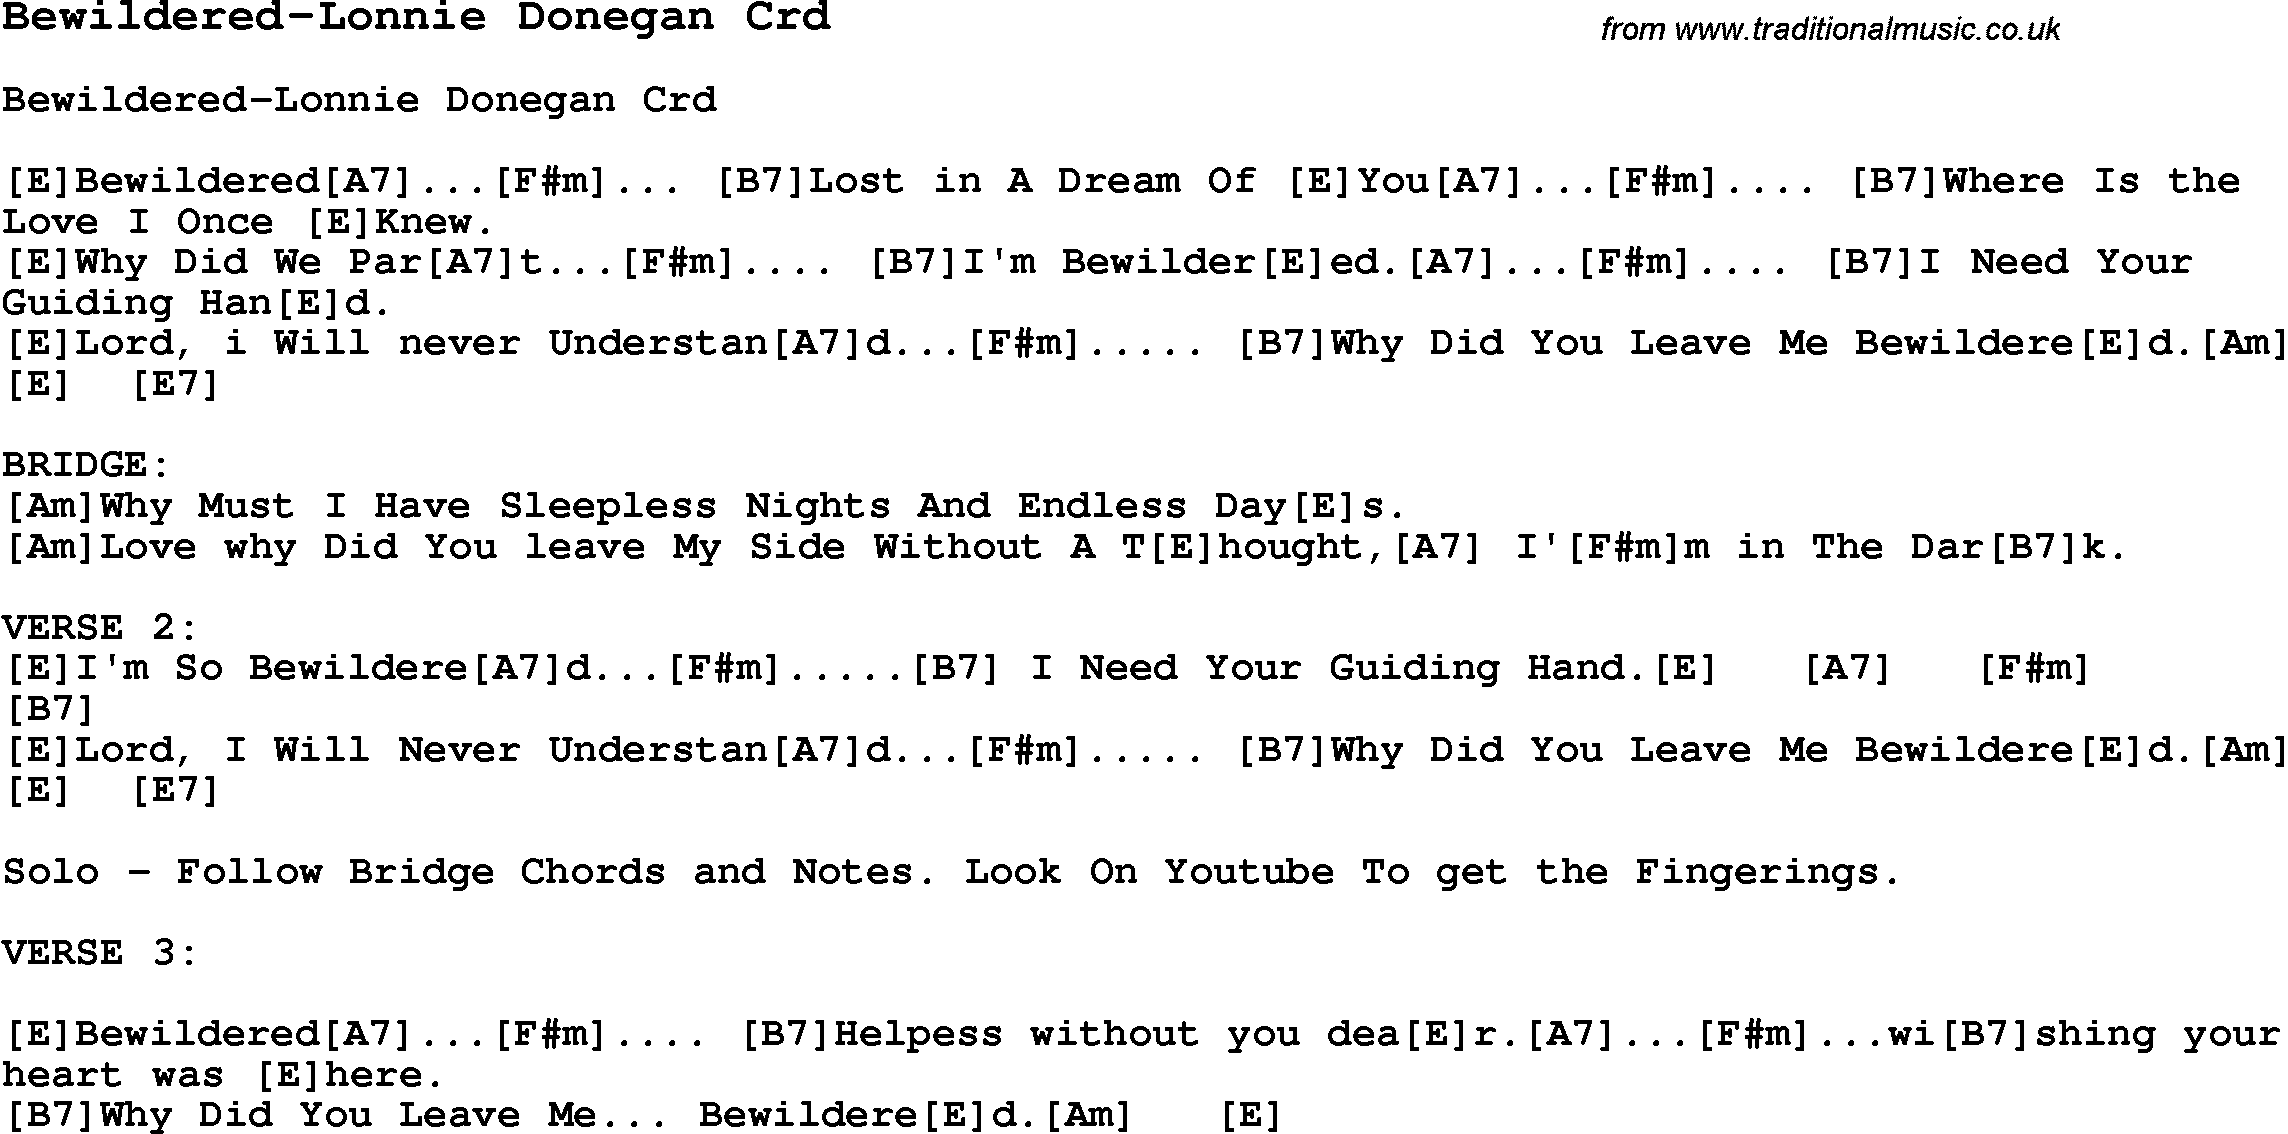 Skiffle Song Lyrics for Bewildered-Lonnie Donegan with chords for Mandolin, Ukulele, Guitar, Banjo etc.